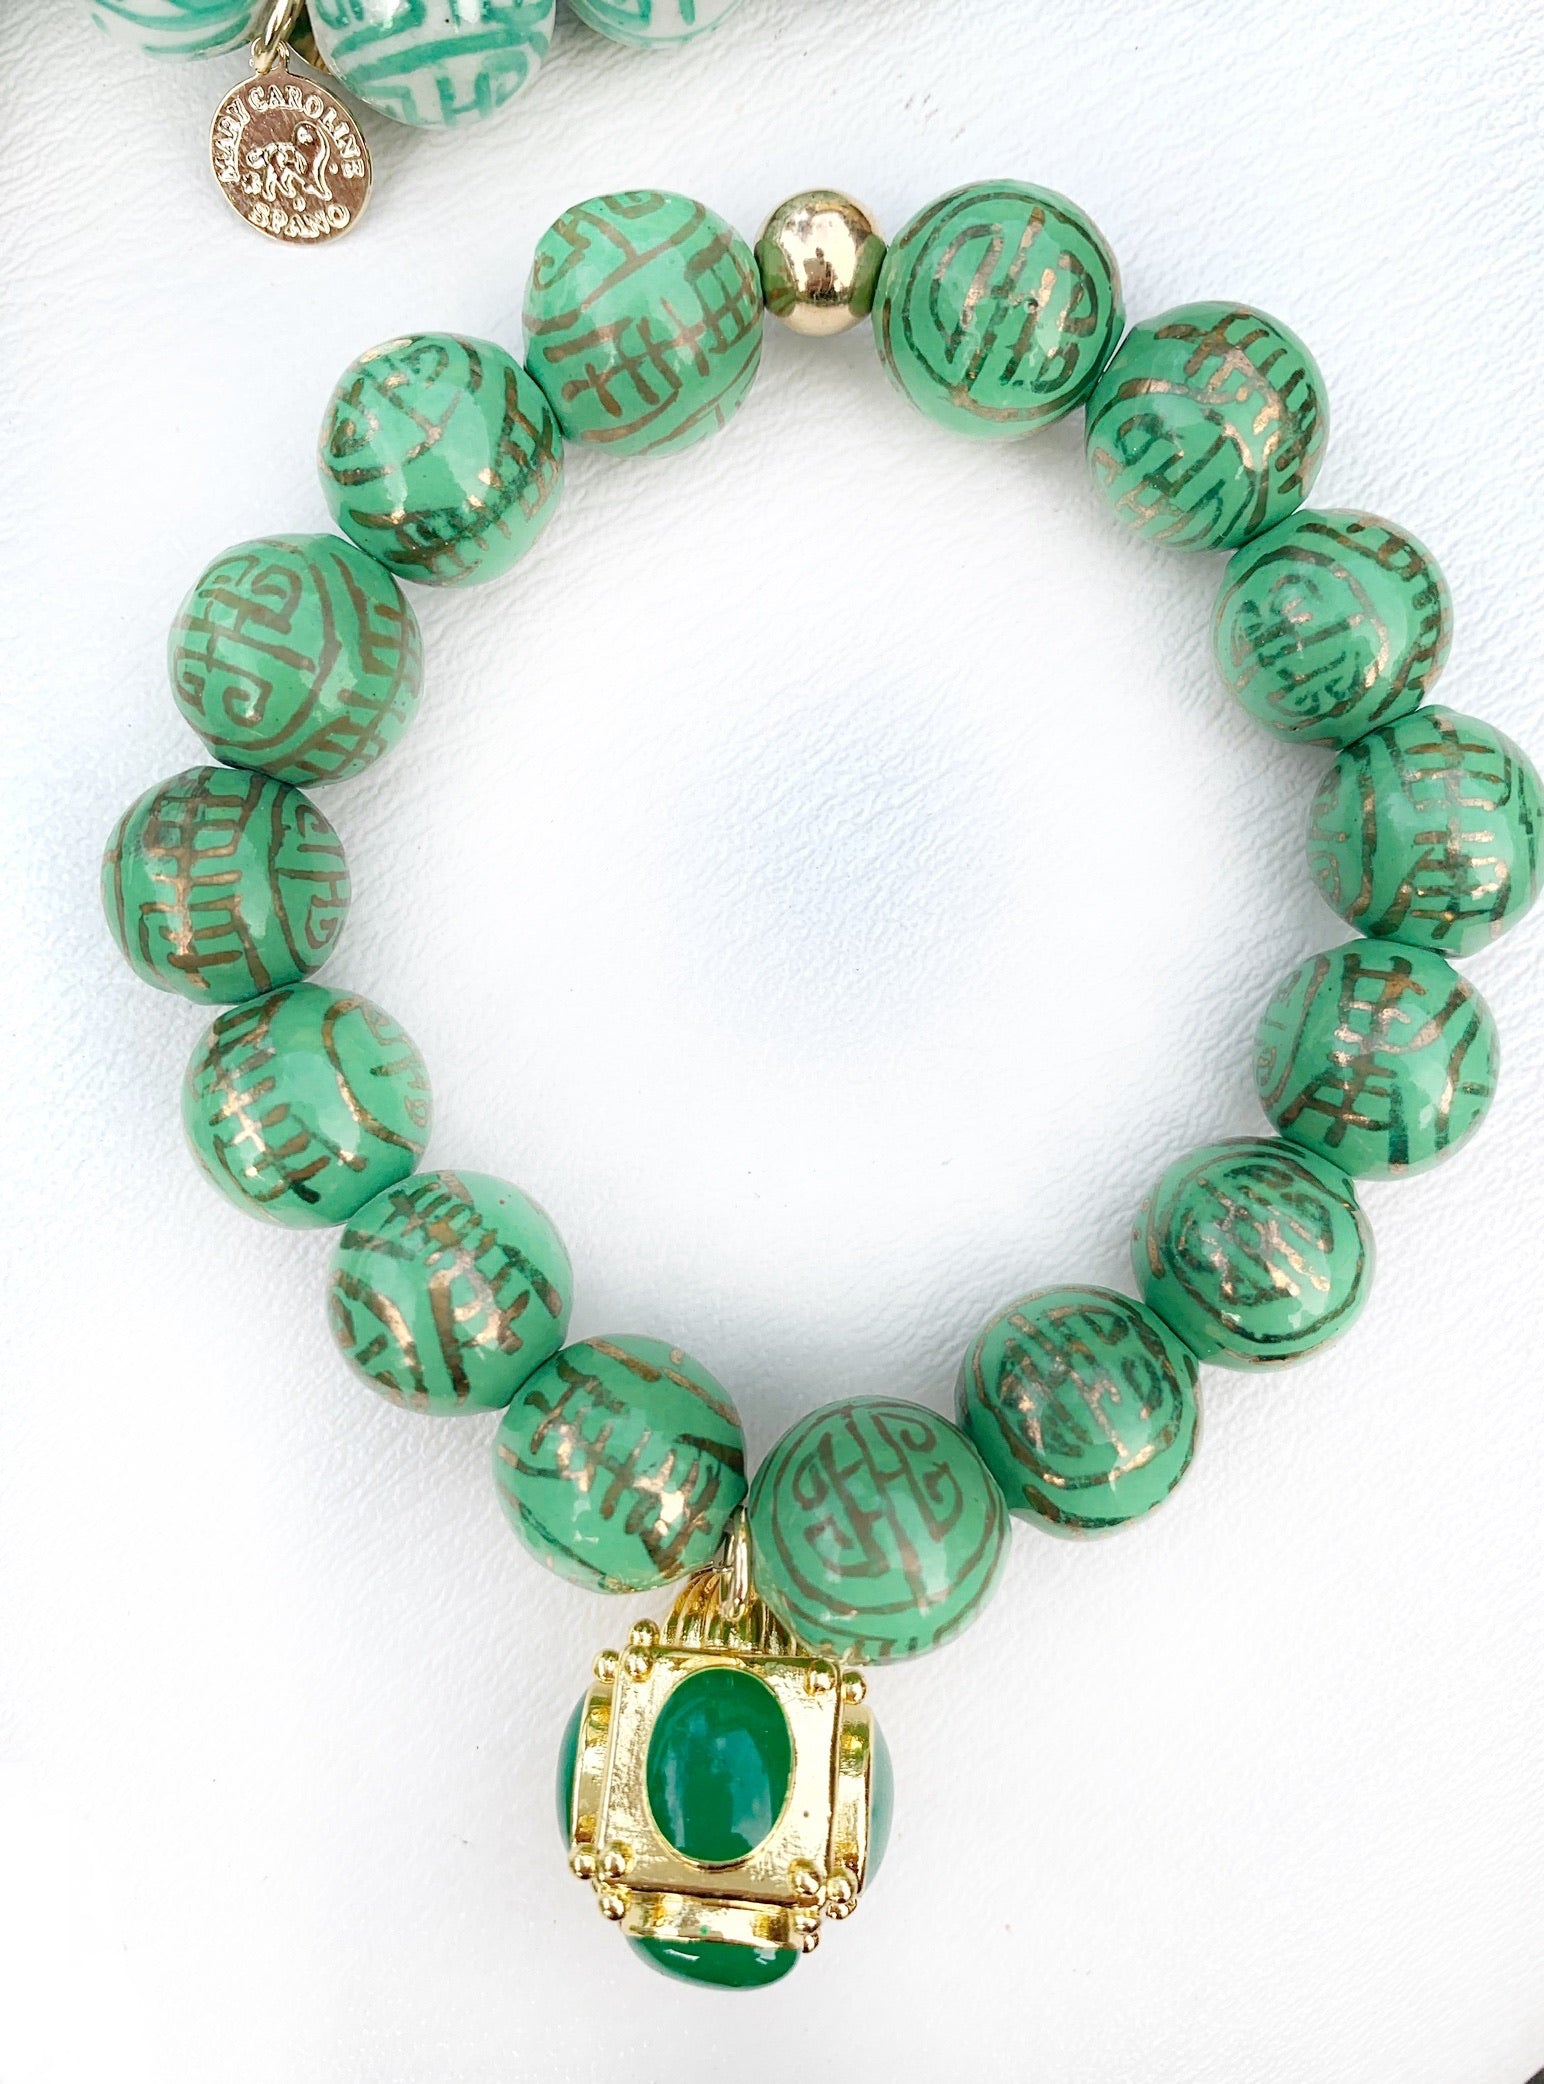 Light of the World lantern charm bracelet - Luxe beads ( gold paint longevity symbol)